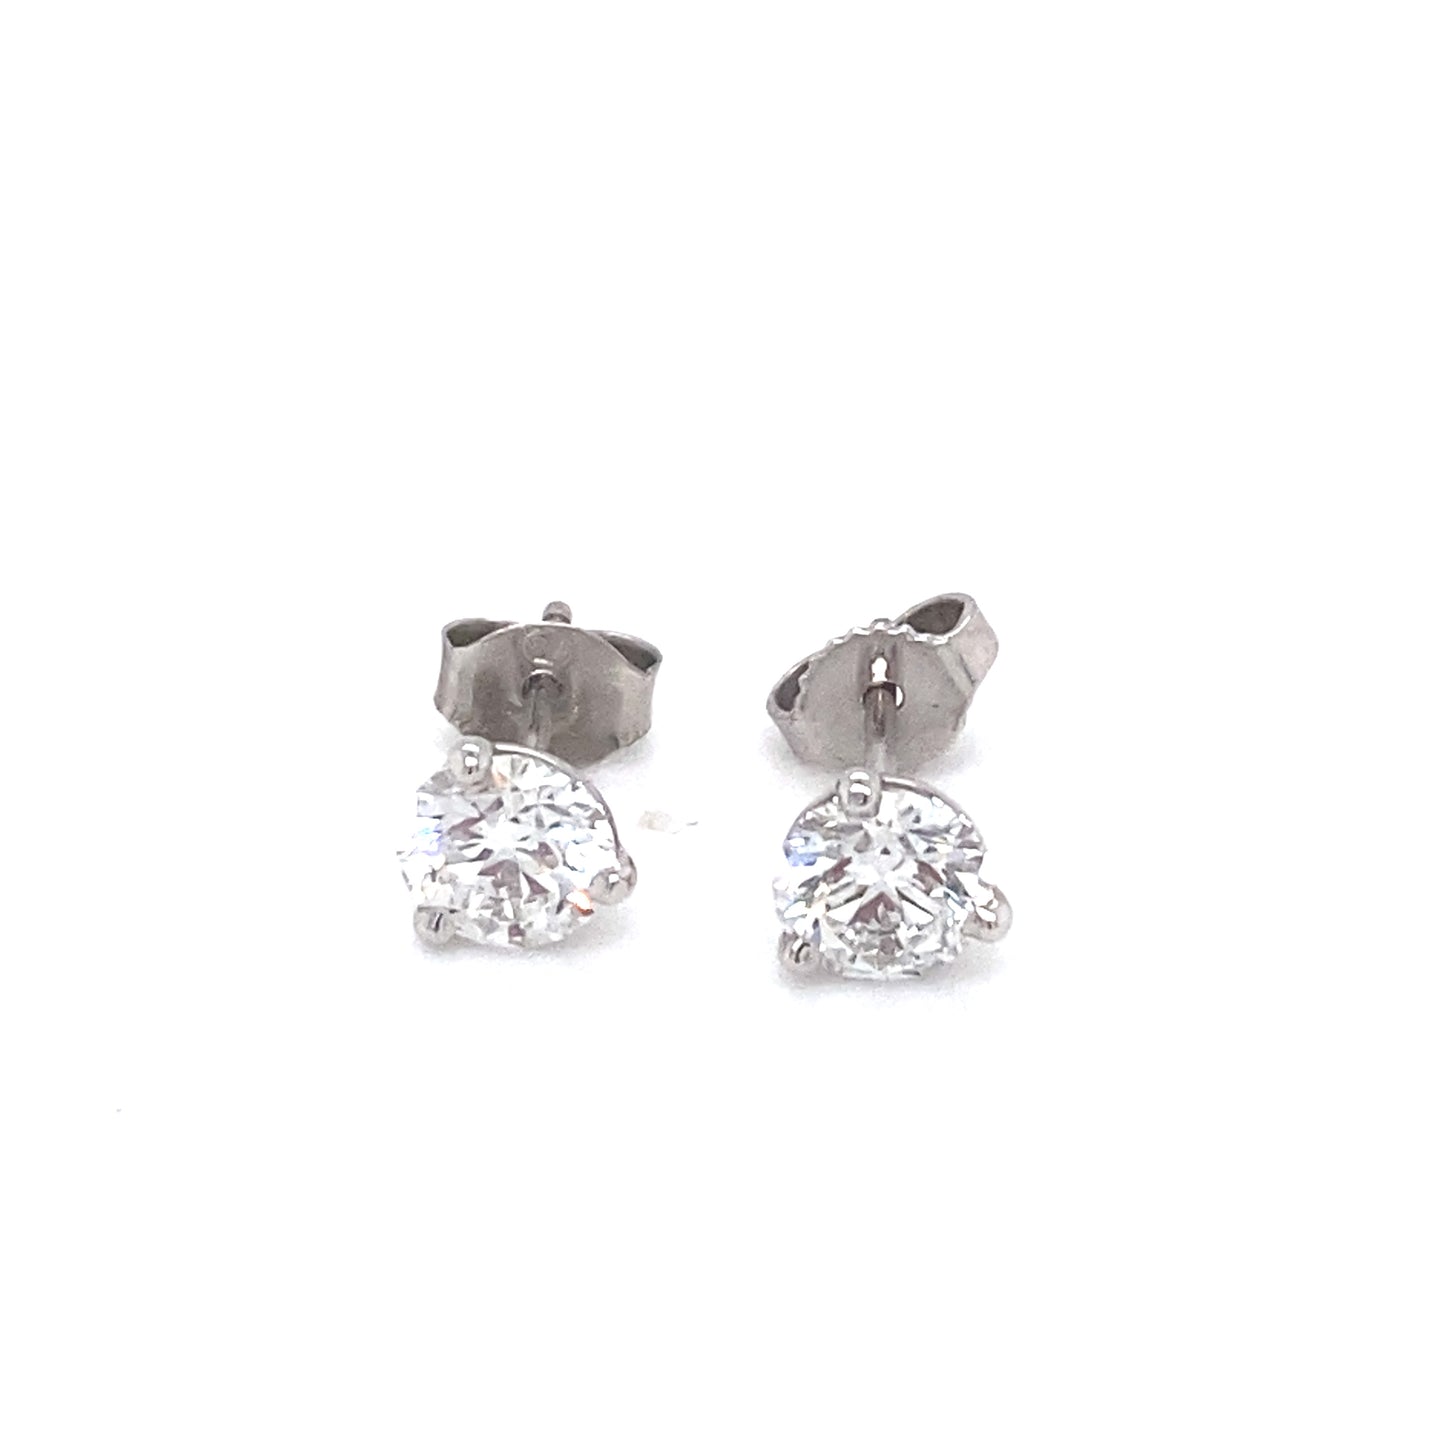 Circa 2000s 1.50 Carat Round Diamond Stud Earrings in 14K White Gold